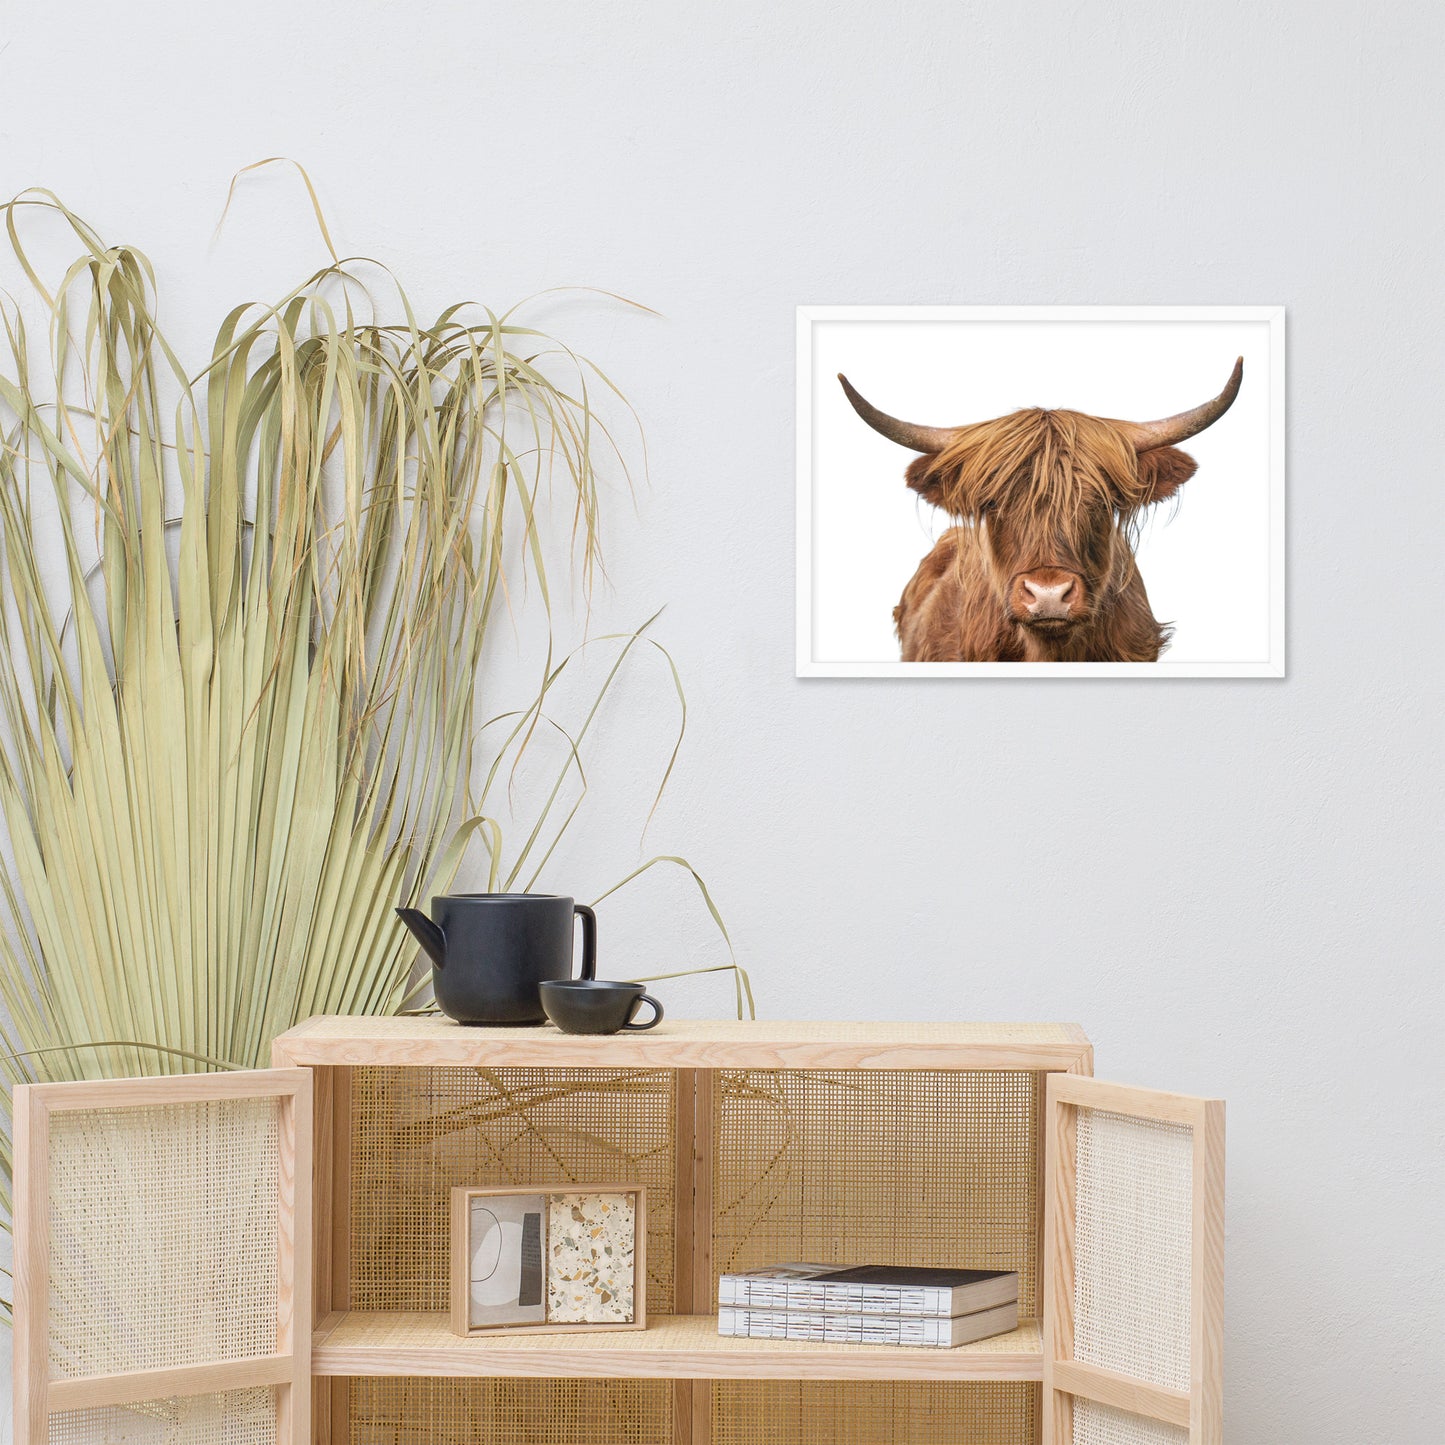 Golden Highland Cow Wildlife / Animal Photo Framed Wall Art Prints